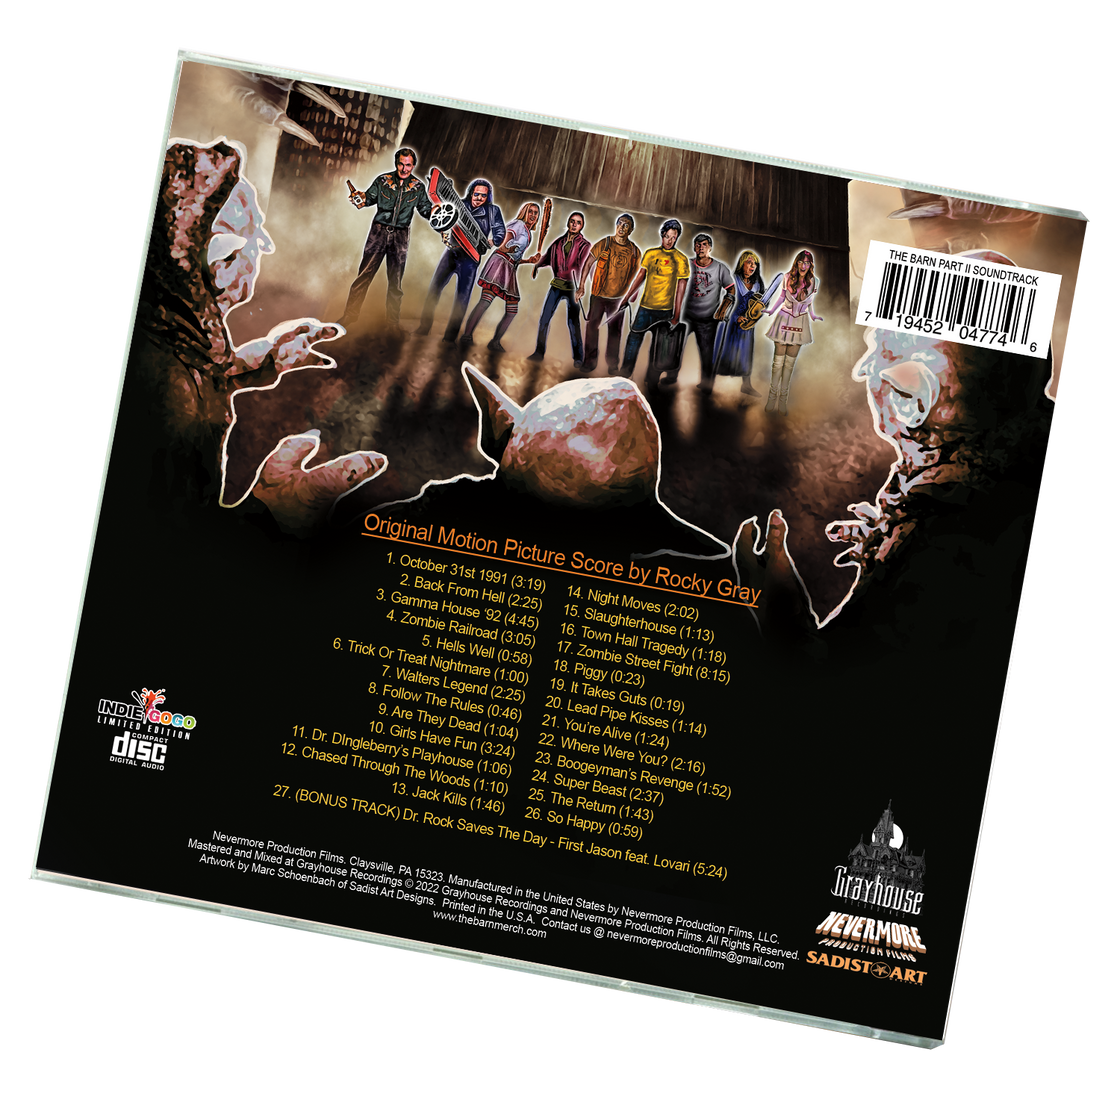 BLACK FRIDAY The Barn Part II - Soundtrack - CD Score by Rocky Gray